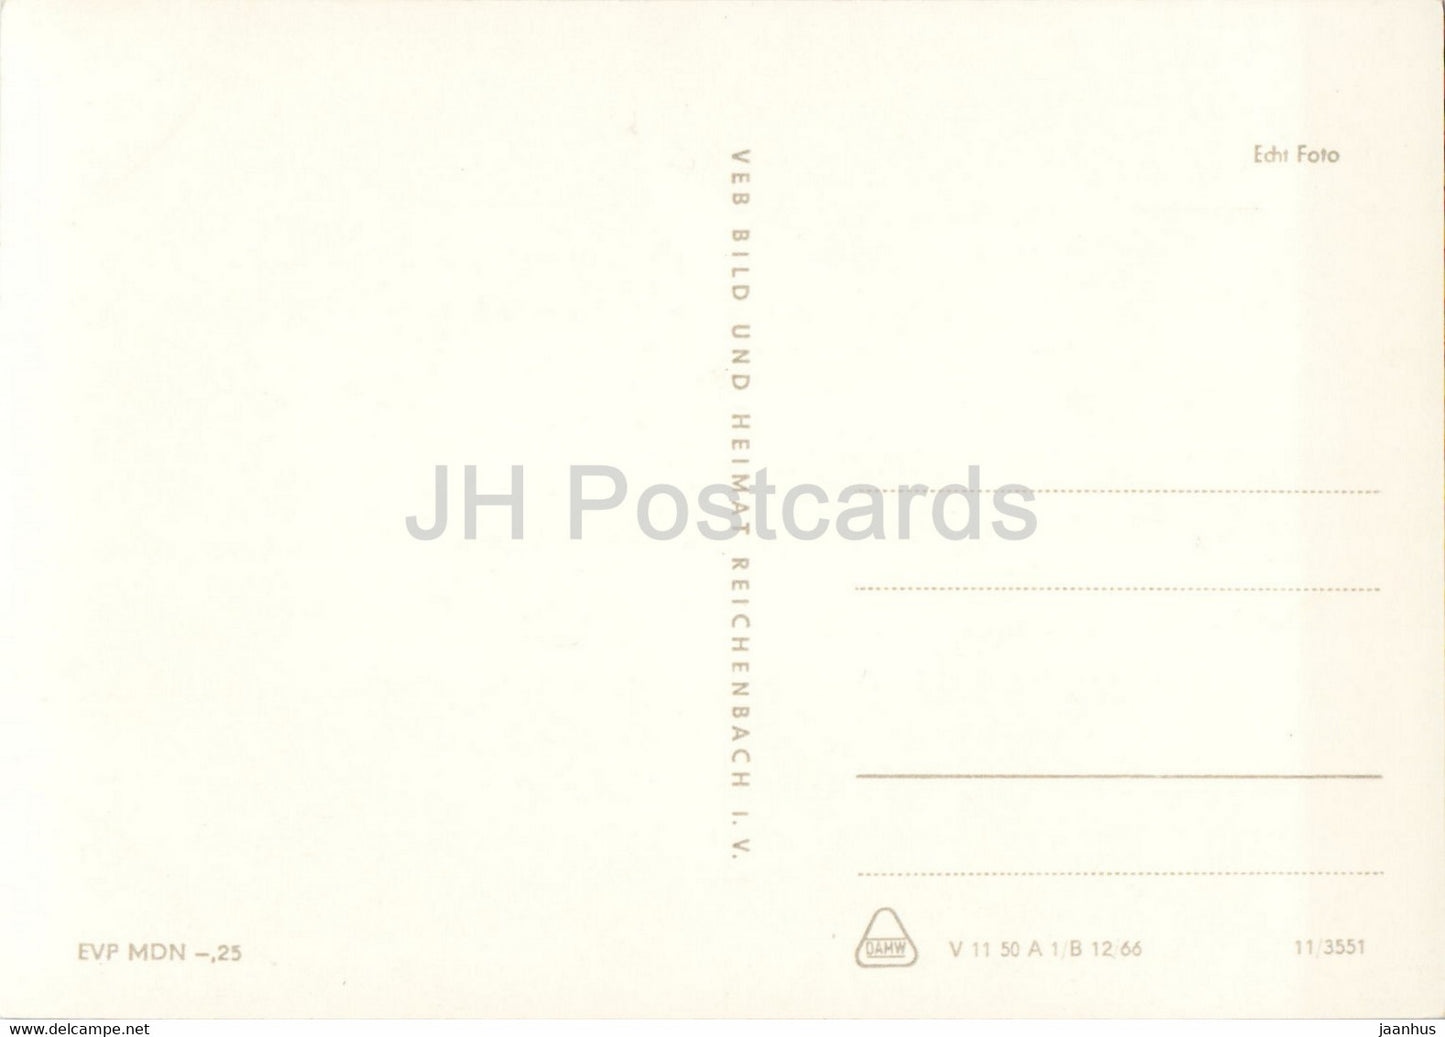 Stutzerbach - Thuringen - old postcard - Germany DDR - unused